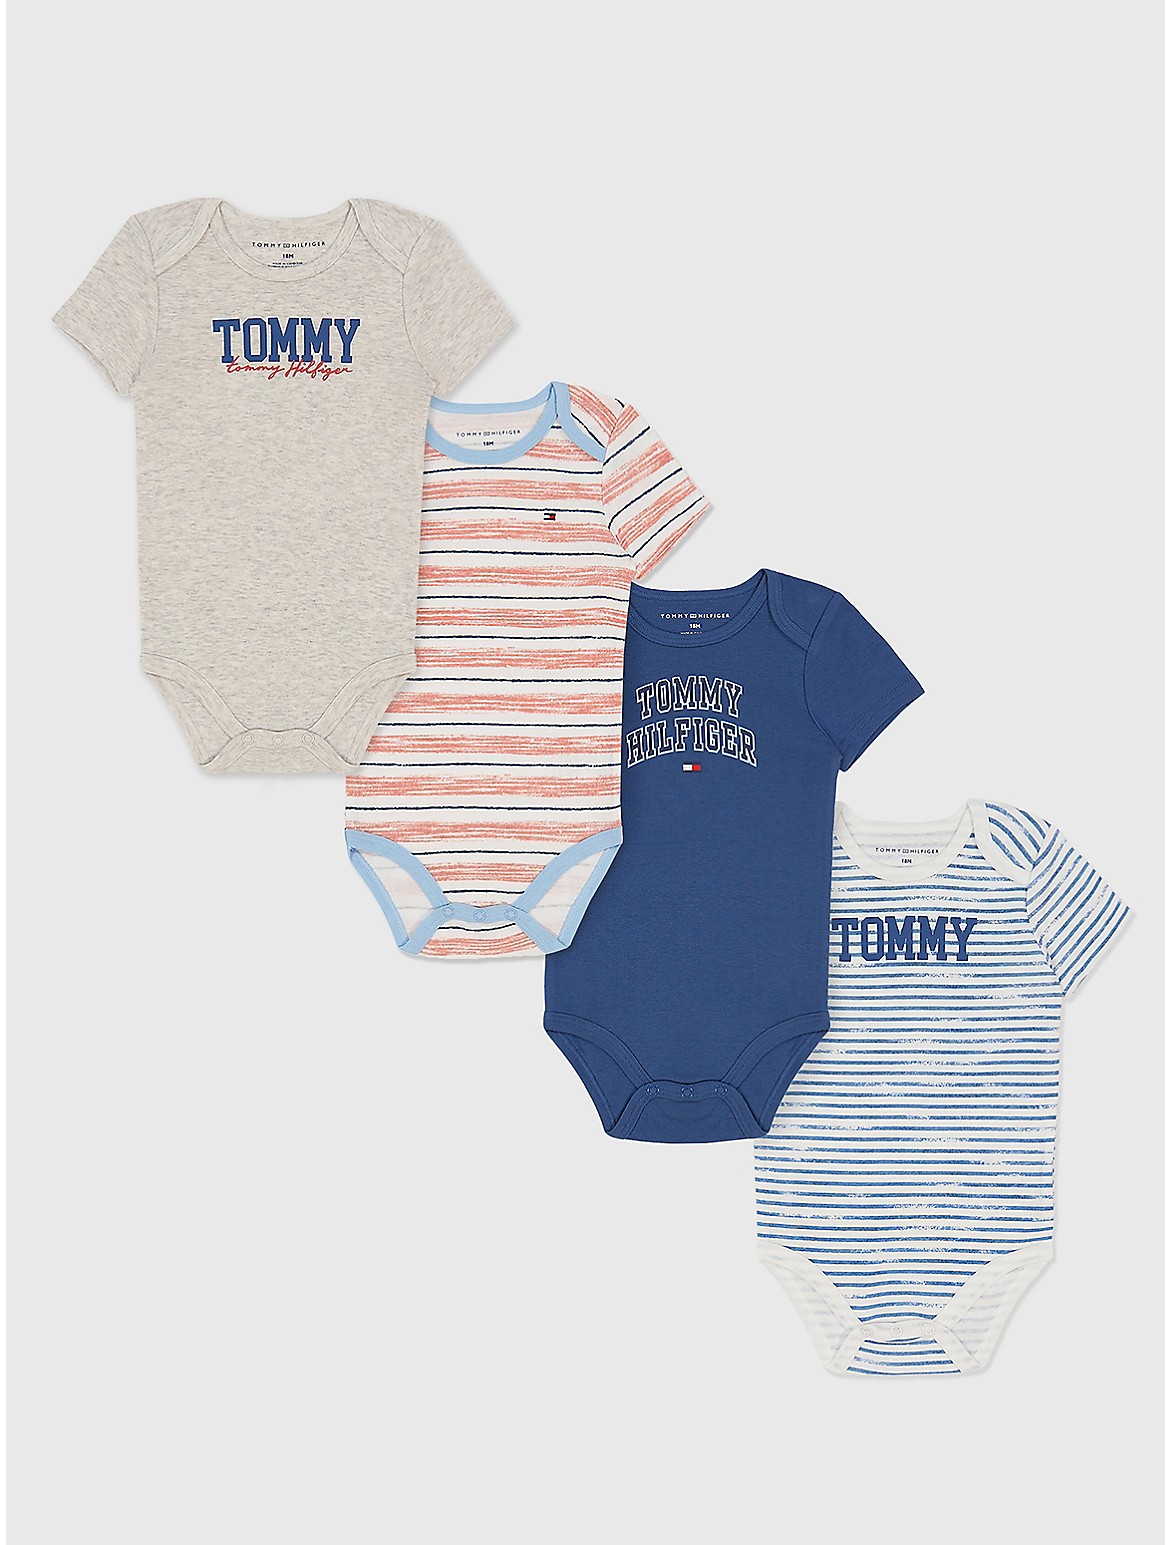 Tommy Hilfiger Boys' Toddlers' Onesie Set 4PK - Multi - 3-6M